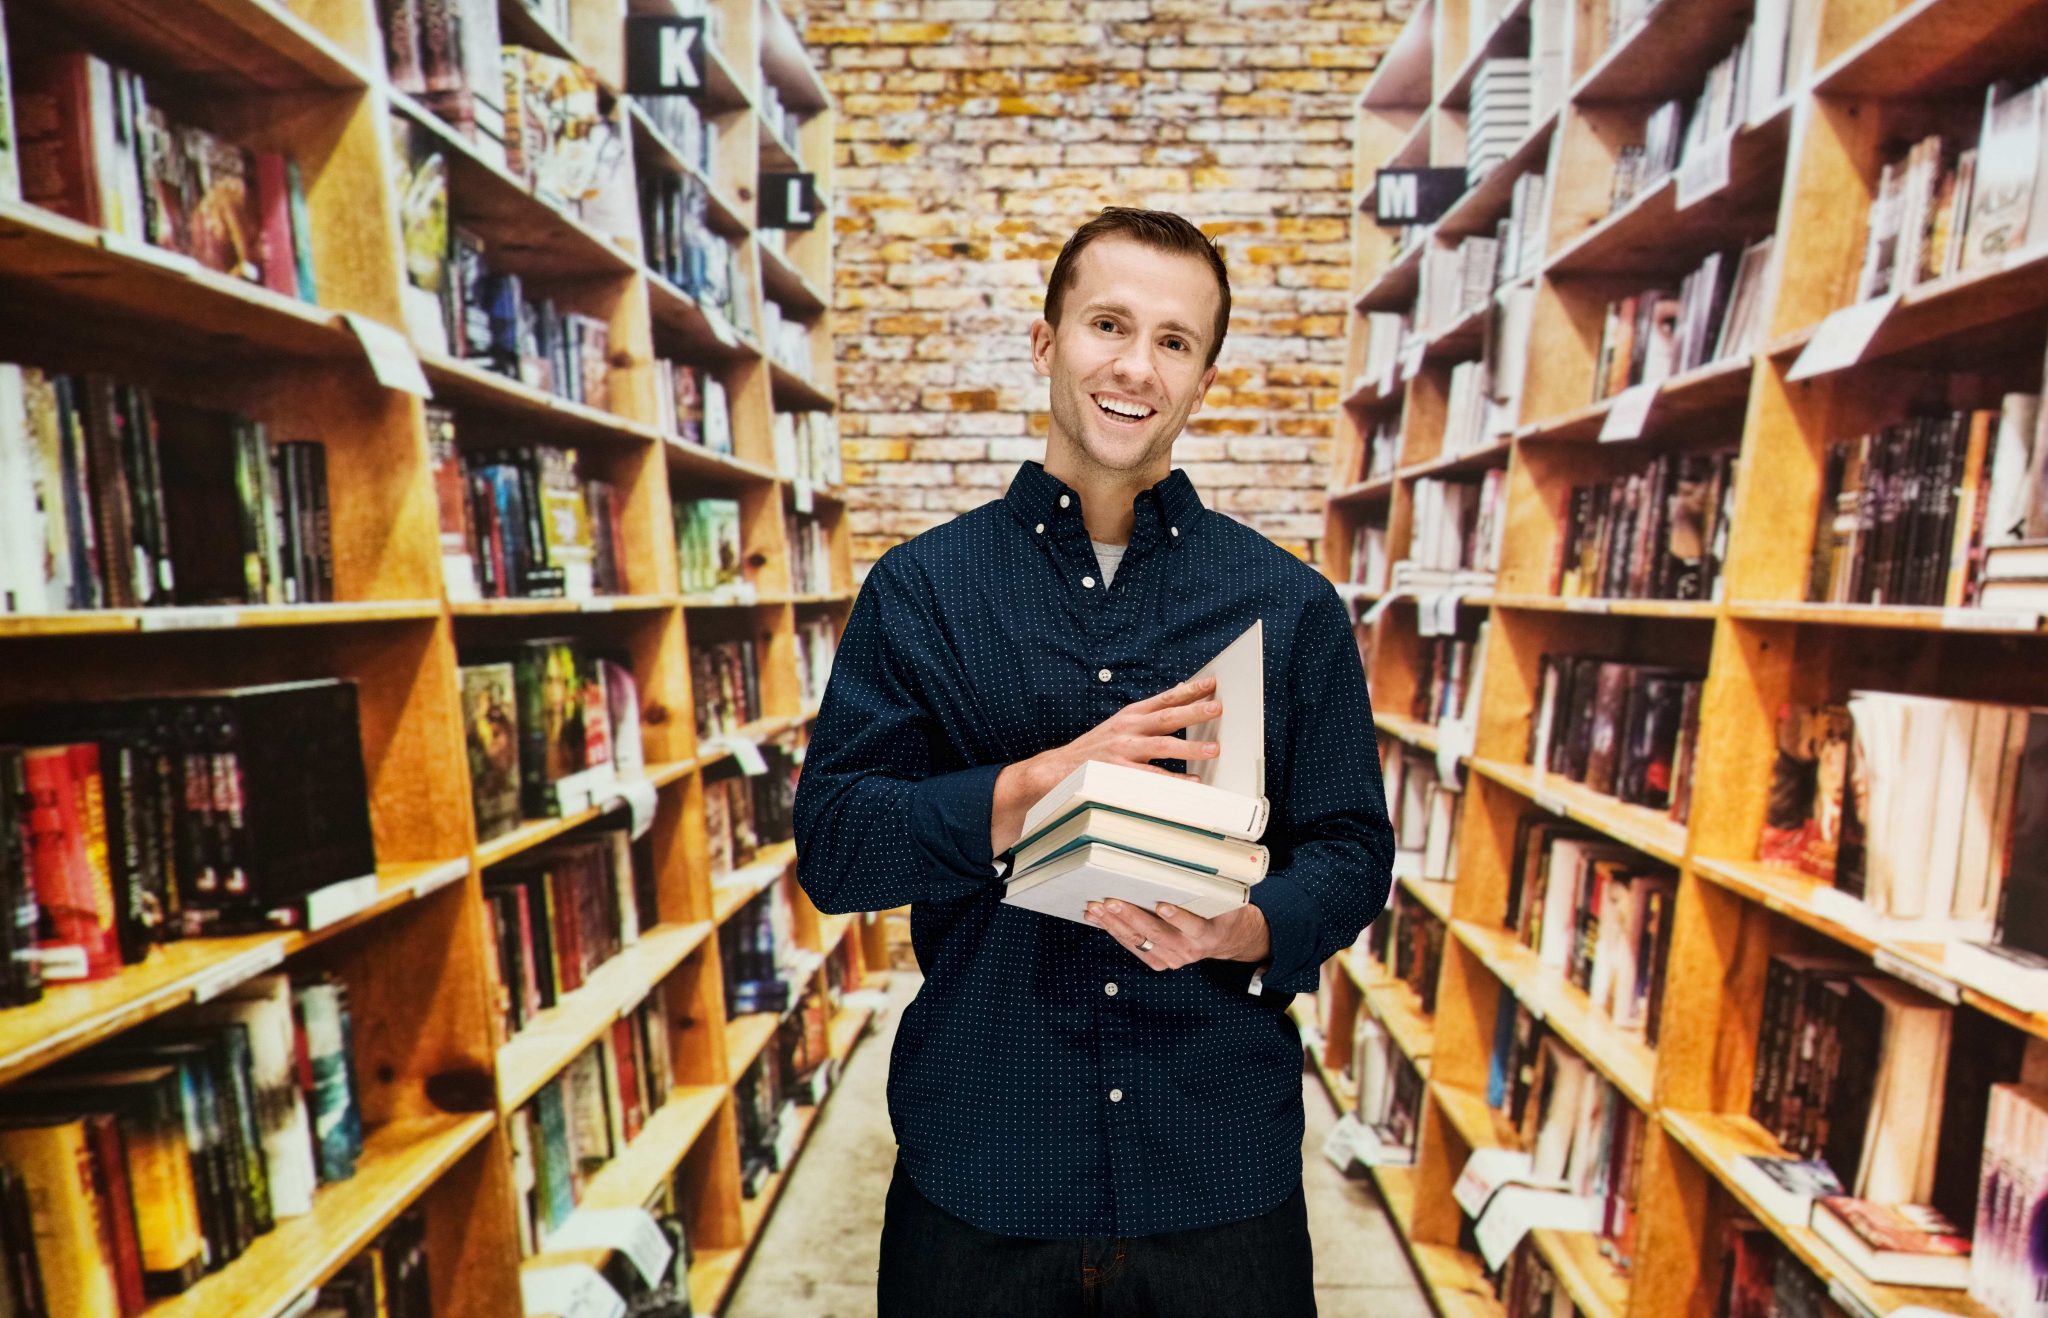 Man in a bookshop holding books